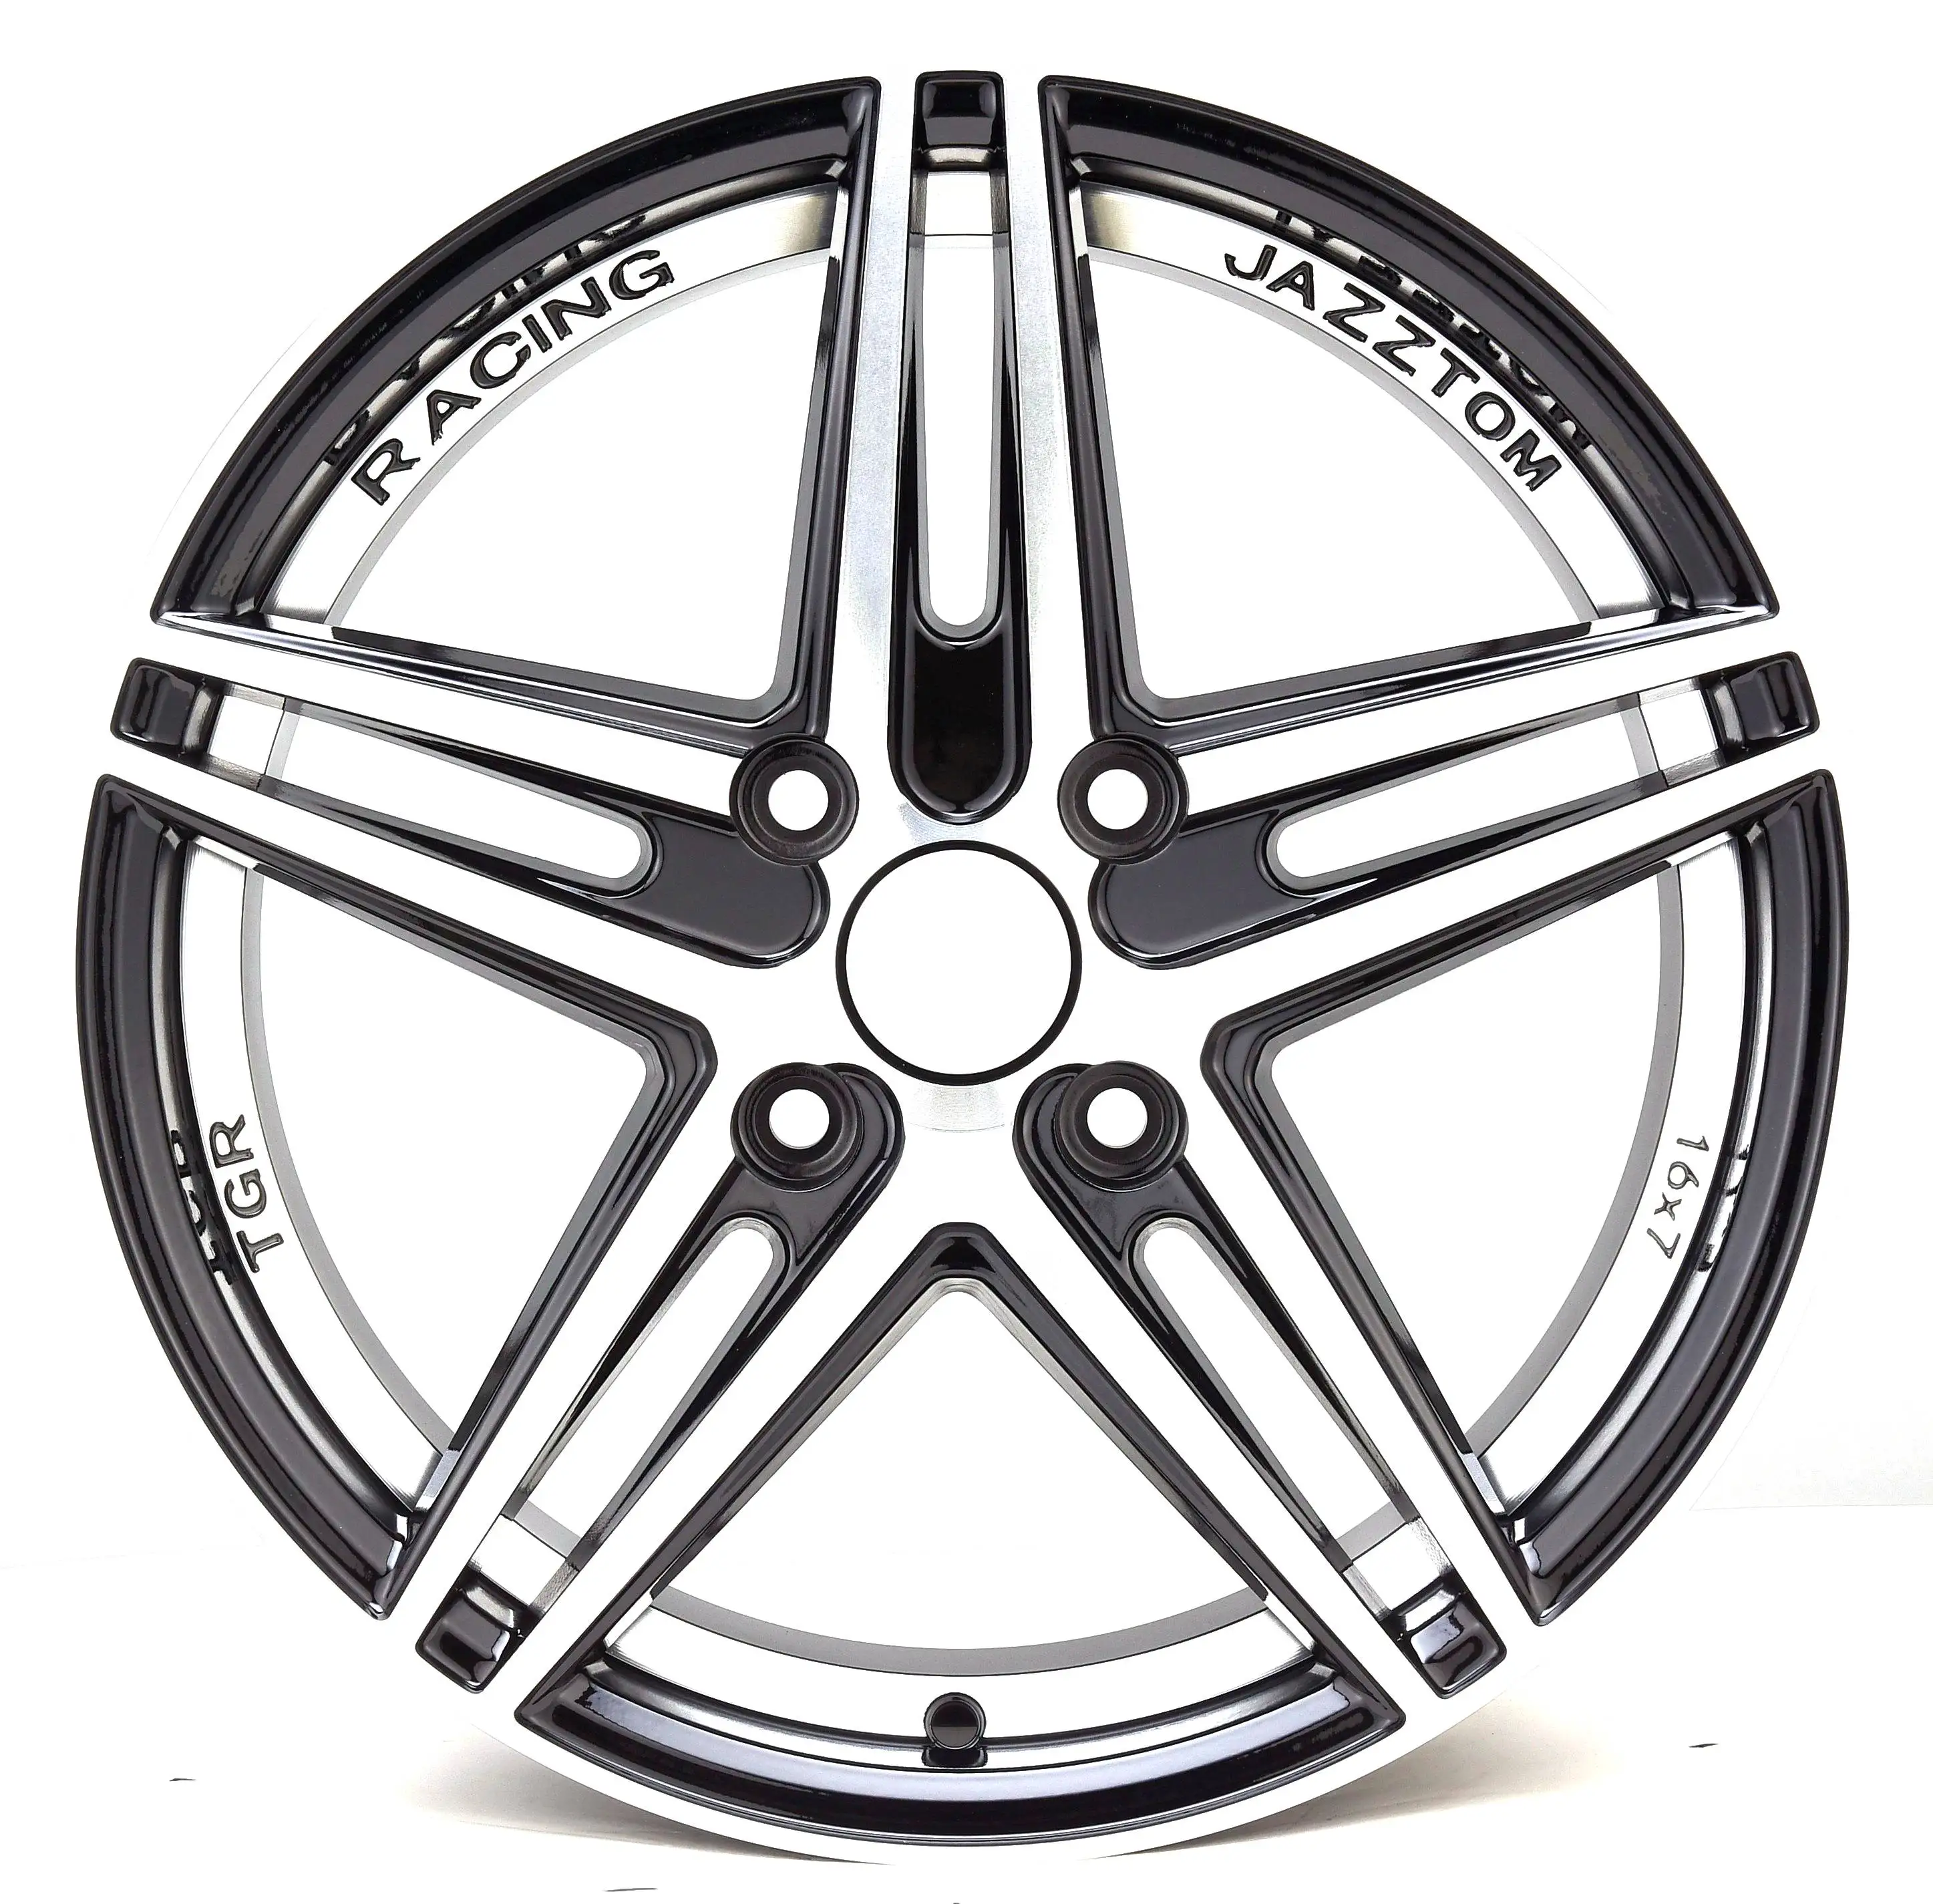 

REW015-7 llantas 17x7.5 universal 17 inch 5 holes sports rims 5x120 r17 aftermarket alloy wheels